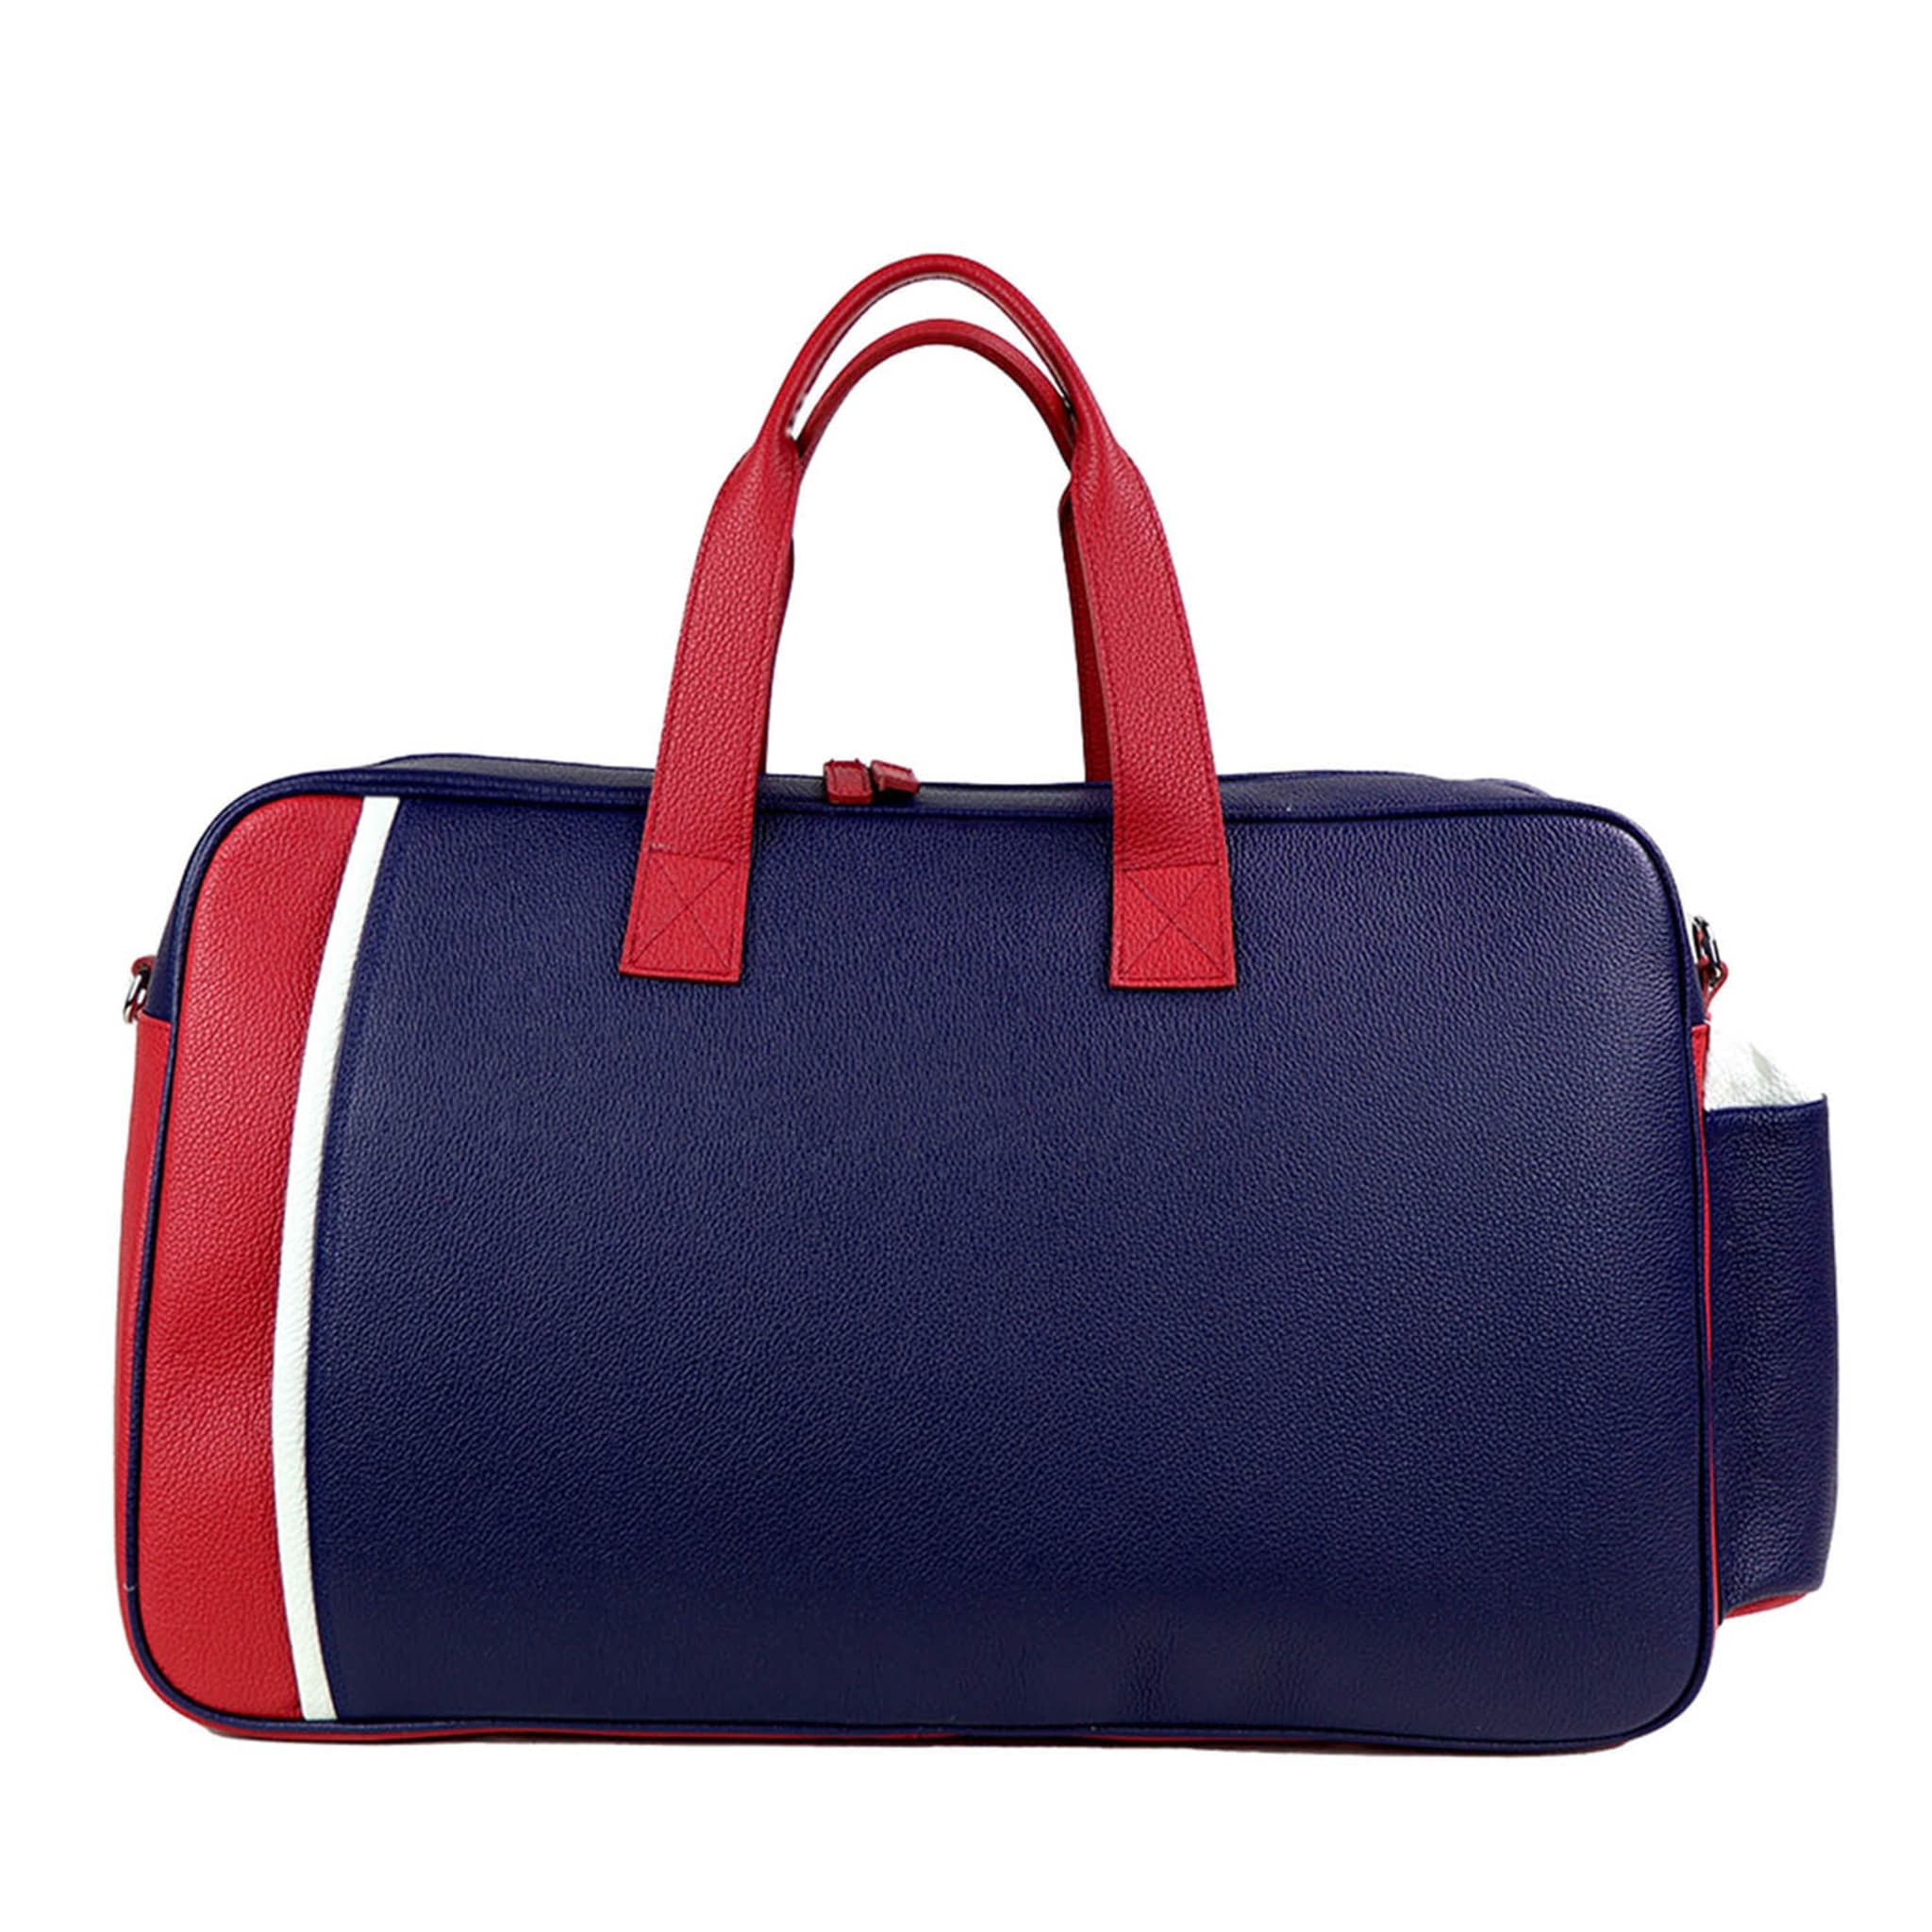 Sport Blue & Red Duffle Bag - Main view